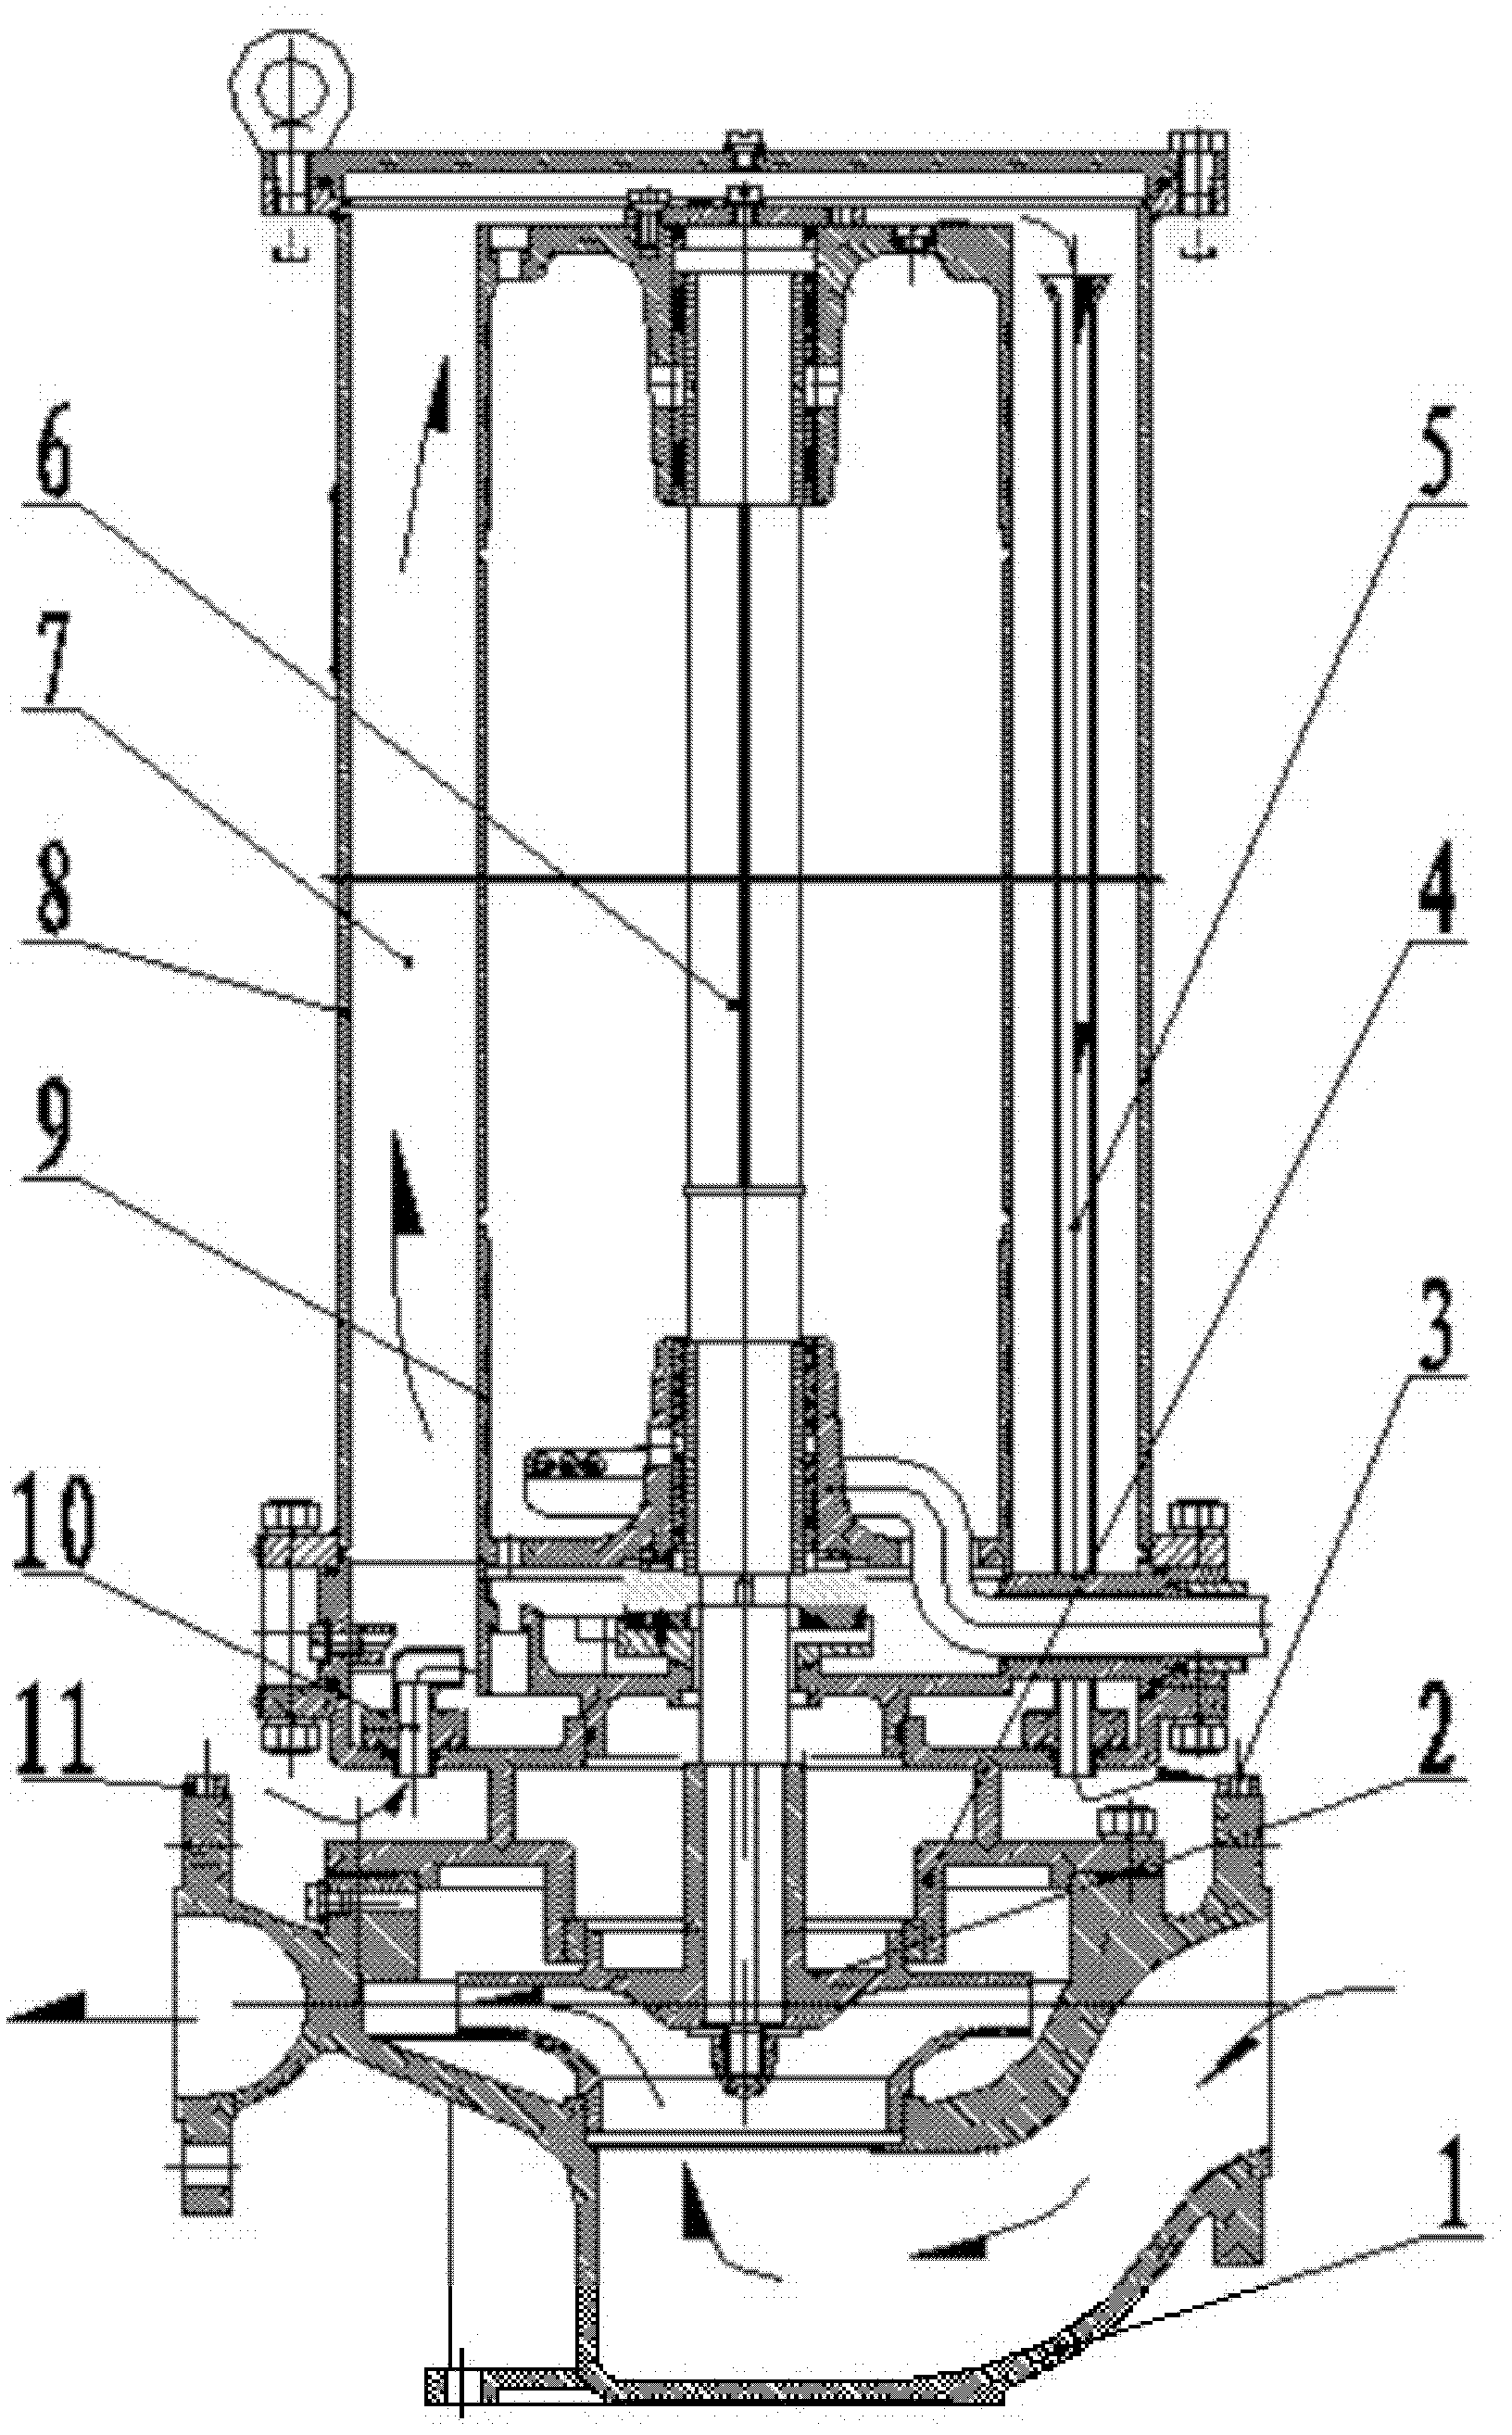 An amphibious vertical centrifugal pump unit